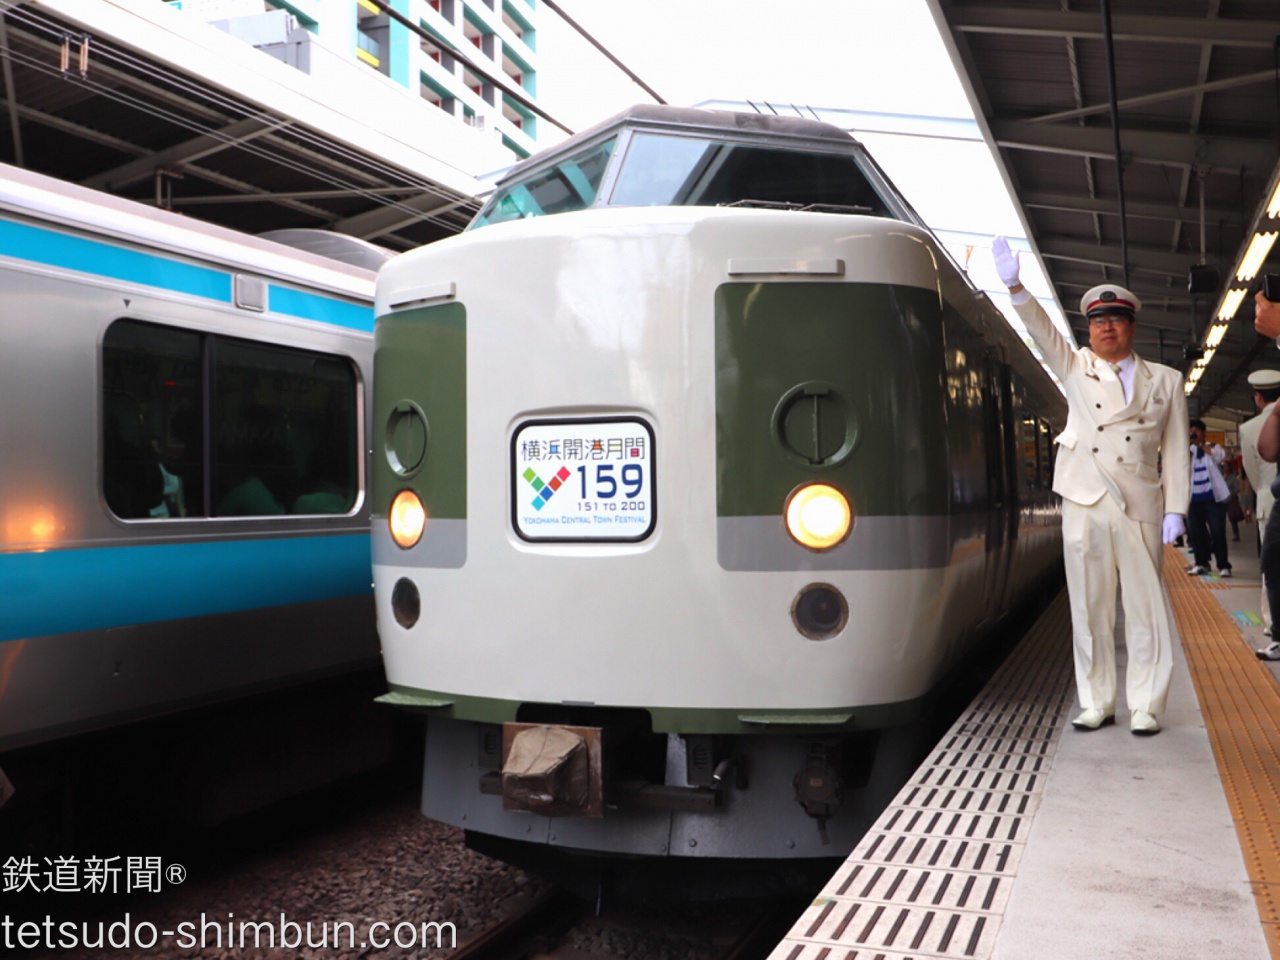 JR東日本横浜支社、189系「Y159記念列車」出発式を開催 | 鉄道ニュース | 鉄道新聞